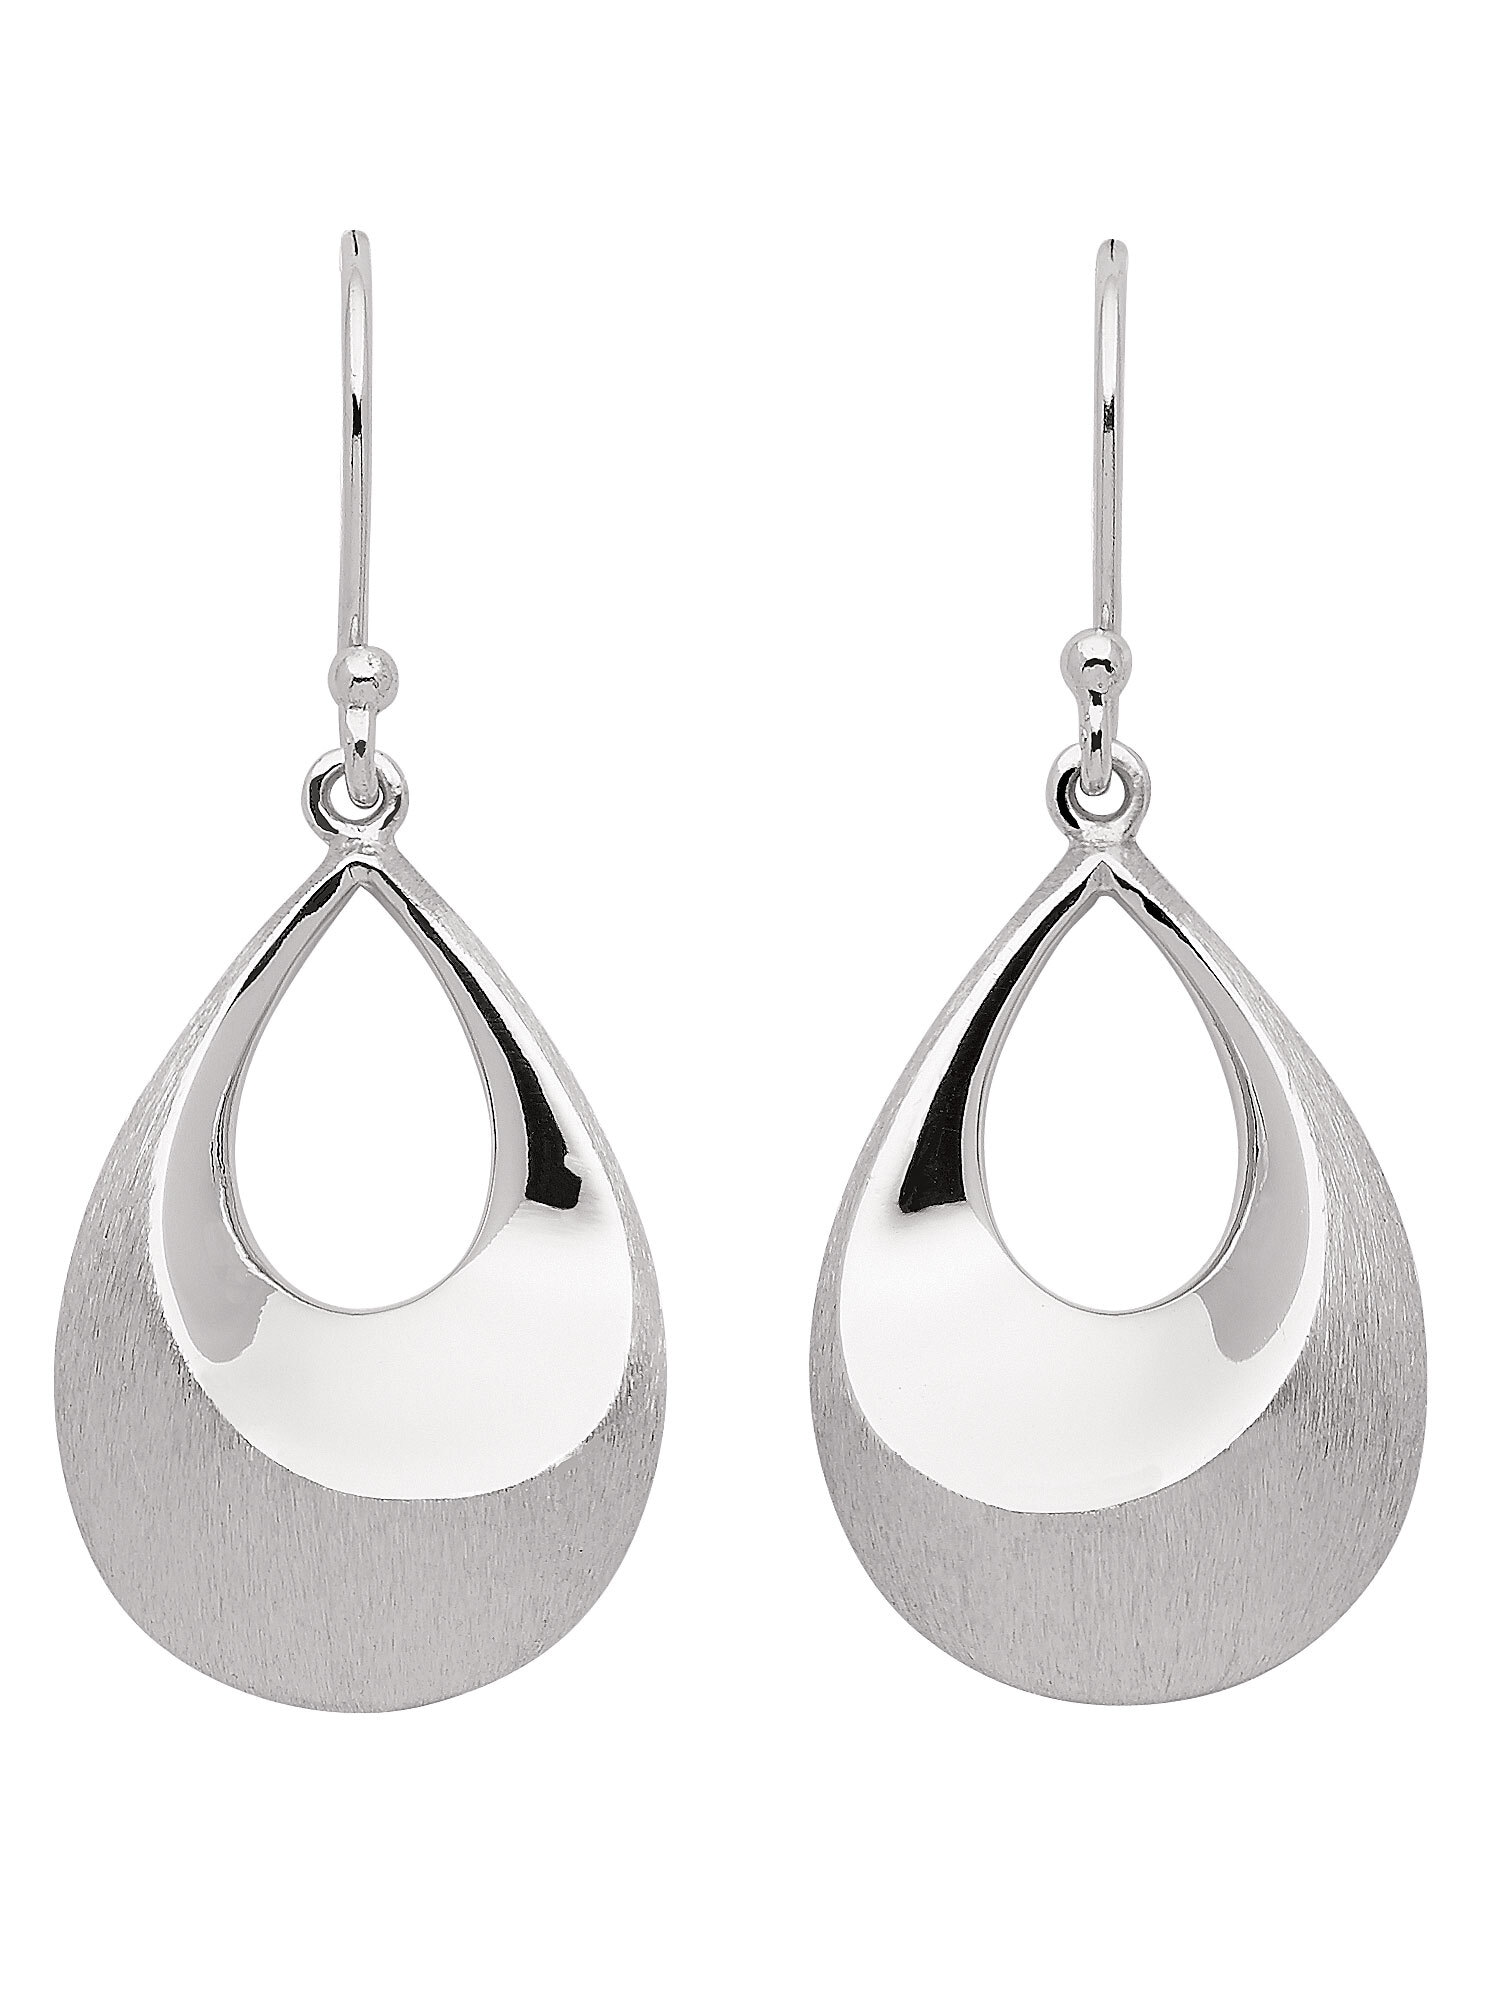 Paar Ohrhänger »925 Silber Ohrringe Ohrhänger«, Silberschmuck für Damen